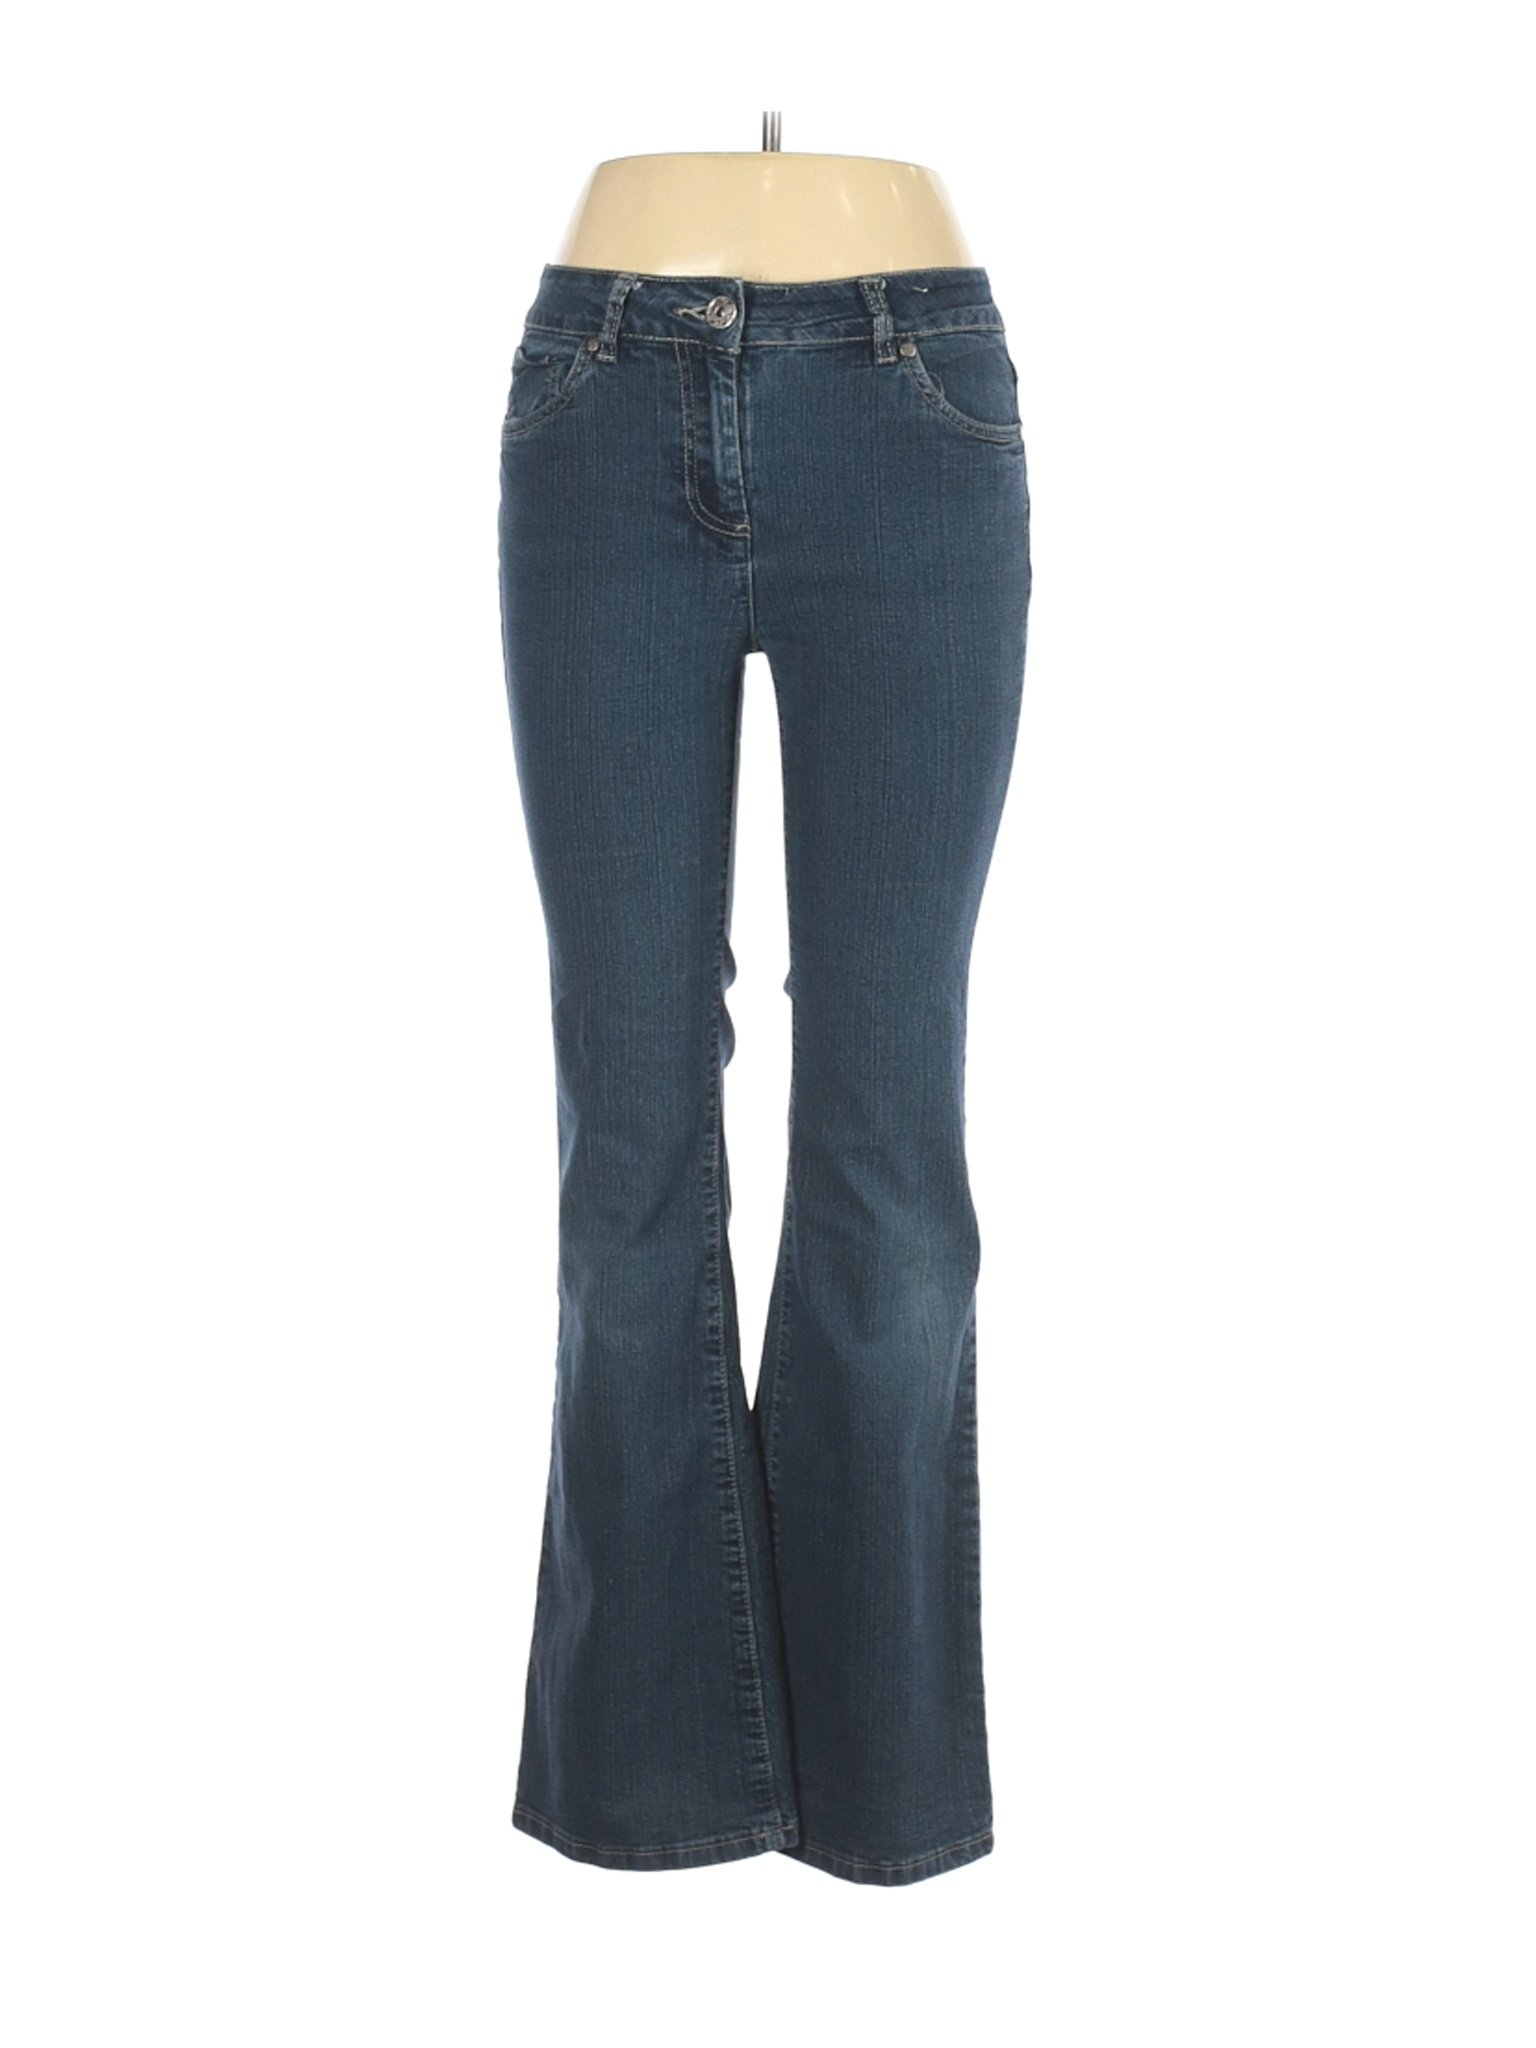 Debenhams Women Blue Jeans 10 | eBay